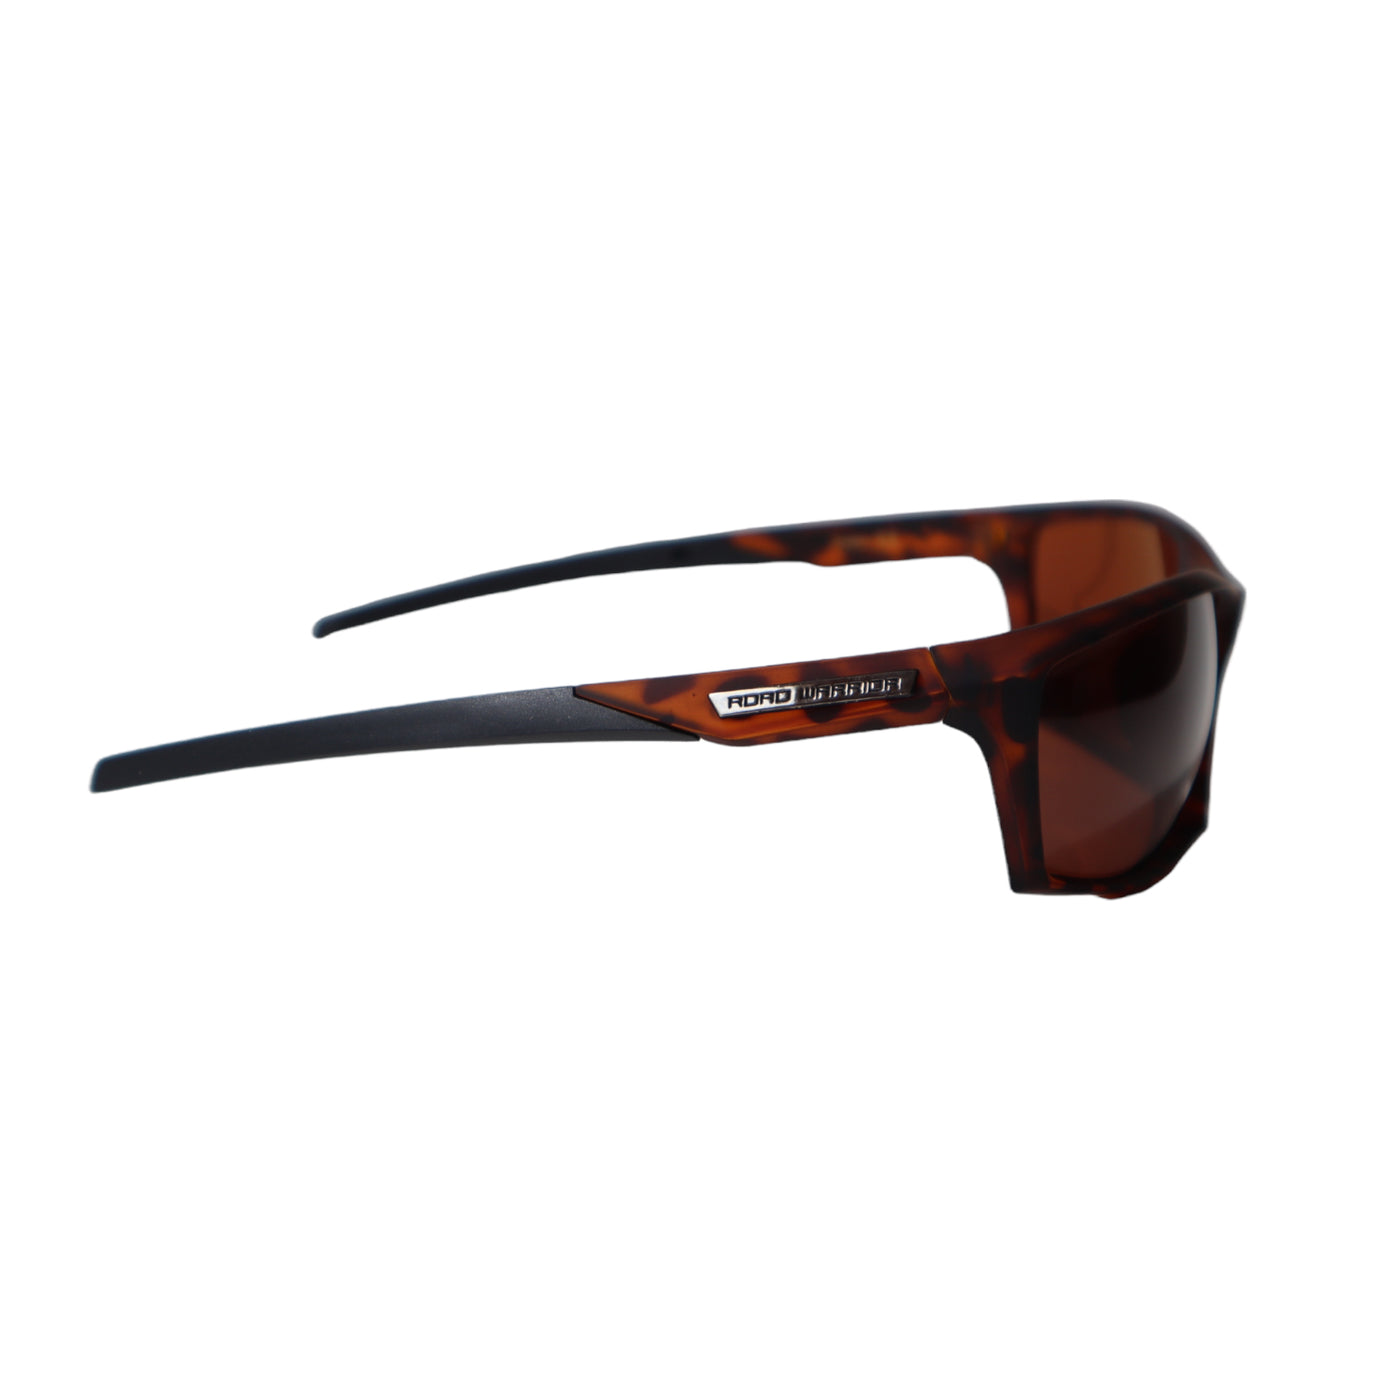 ROAD WARRIOR Anti-Glare Sunglasses Animal Print Frame High Definition Brown Lens